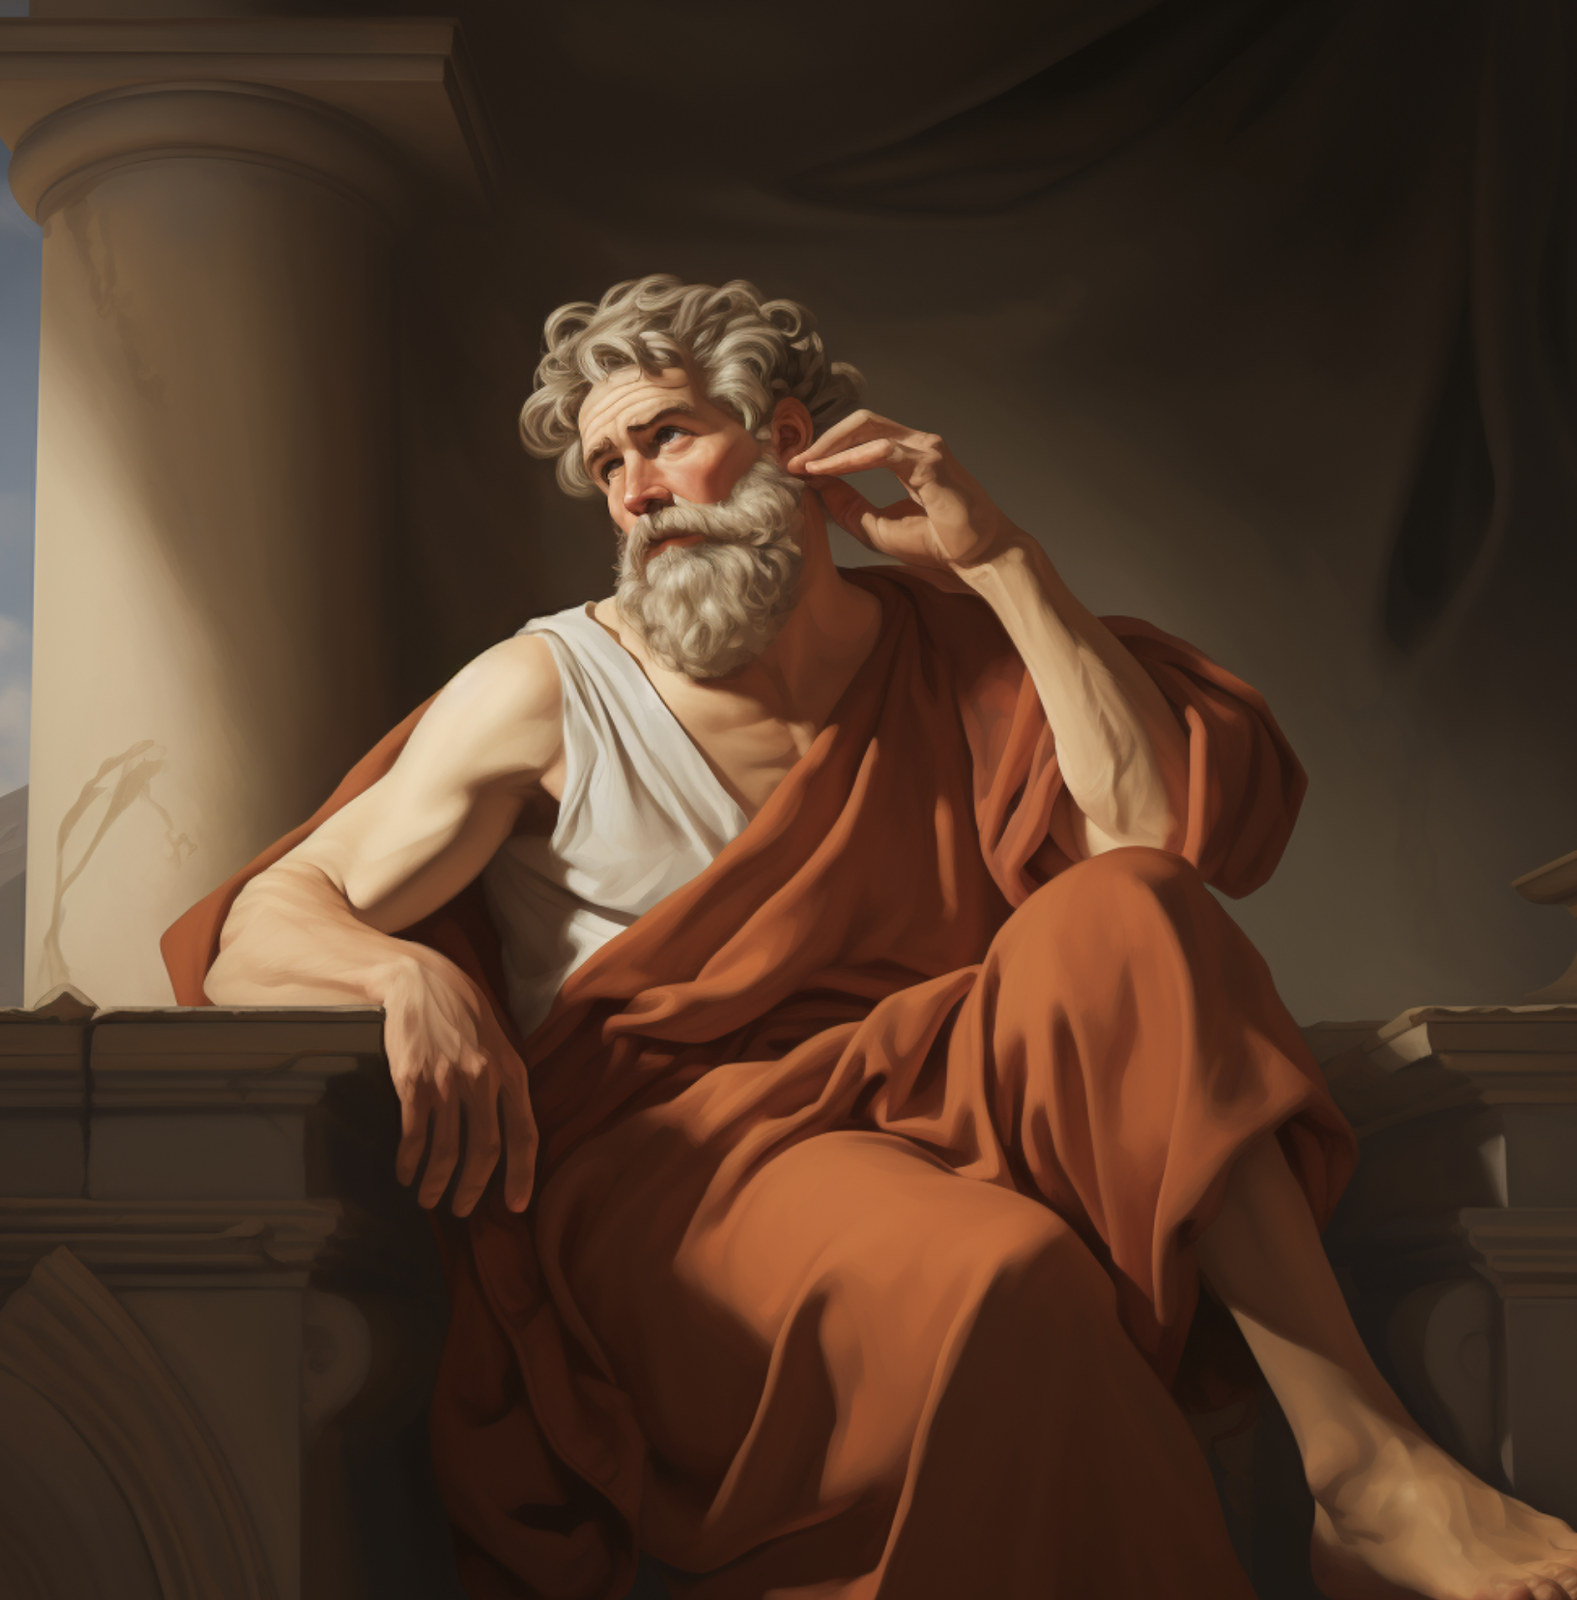 Epictetus leaning on window sill pondering